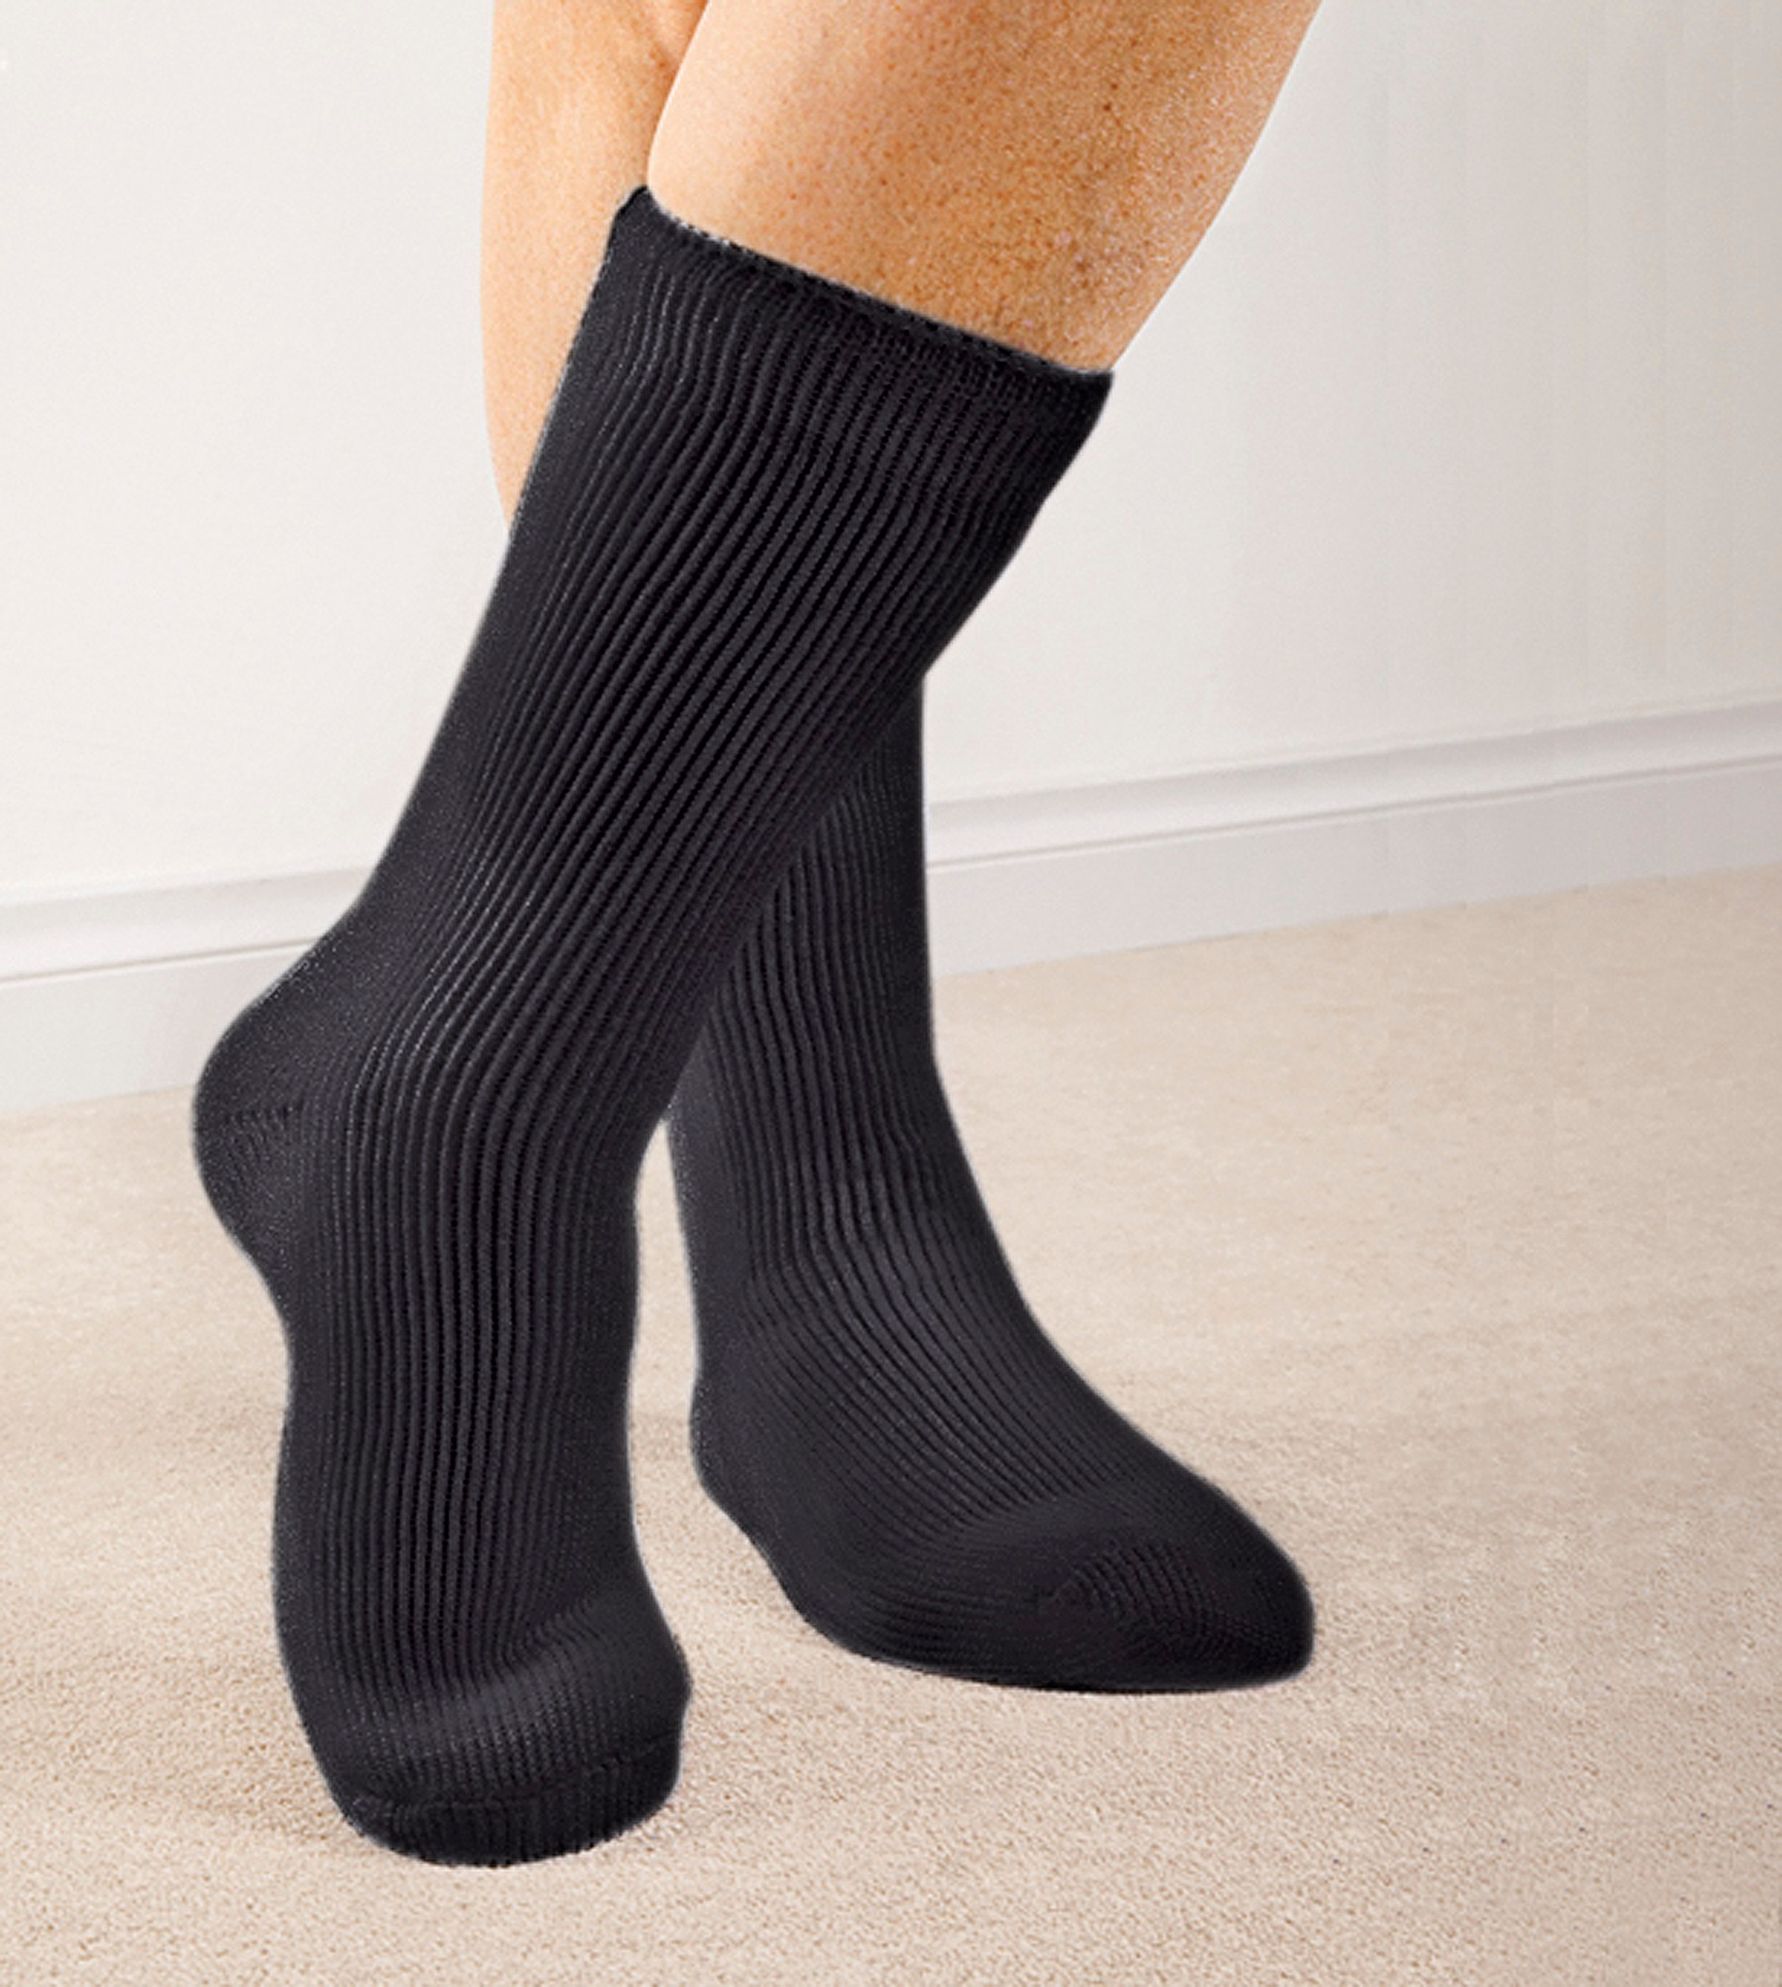 Wärmespeichernde Socken Herren, schwarz, 2 Paar, Größe: 41-45 | Weltbild.de